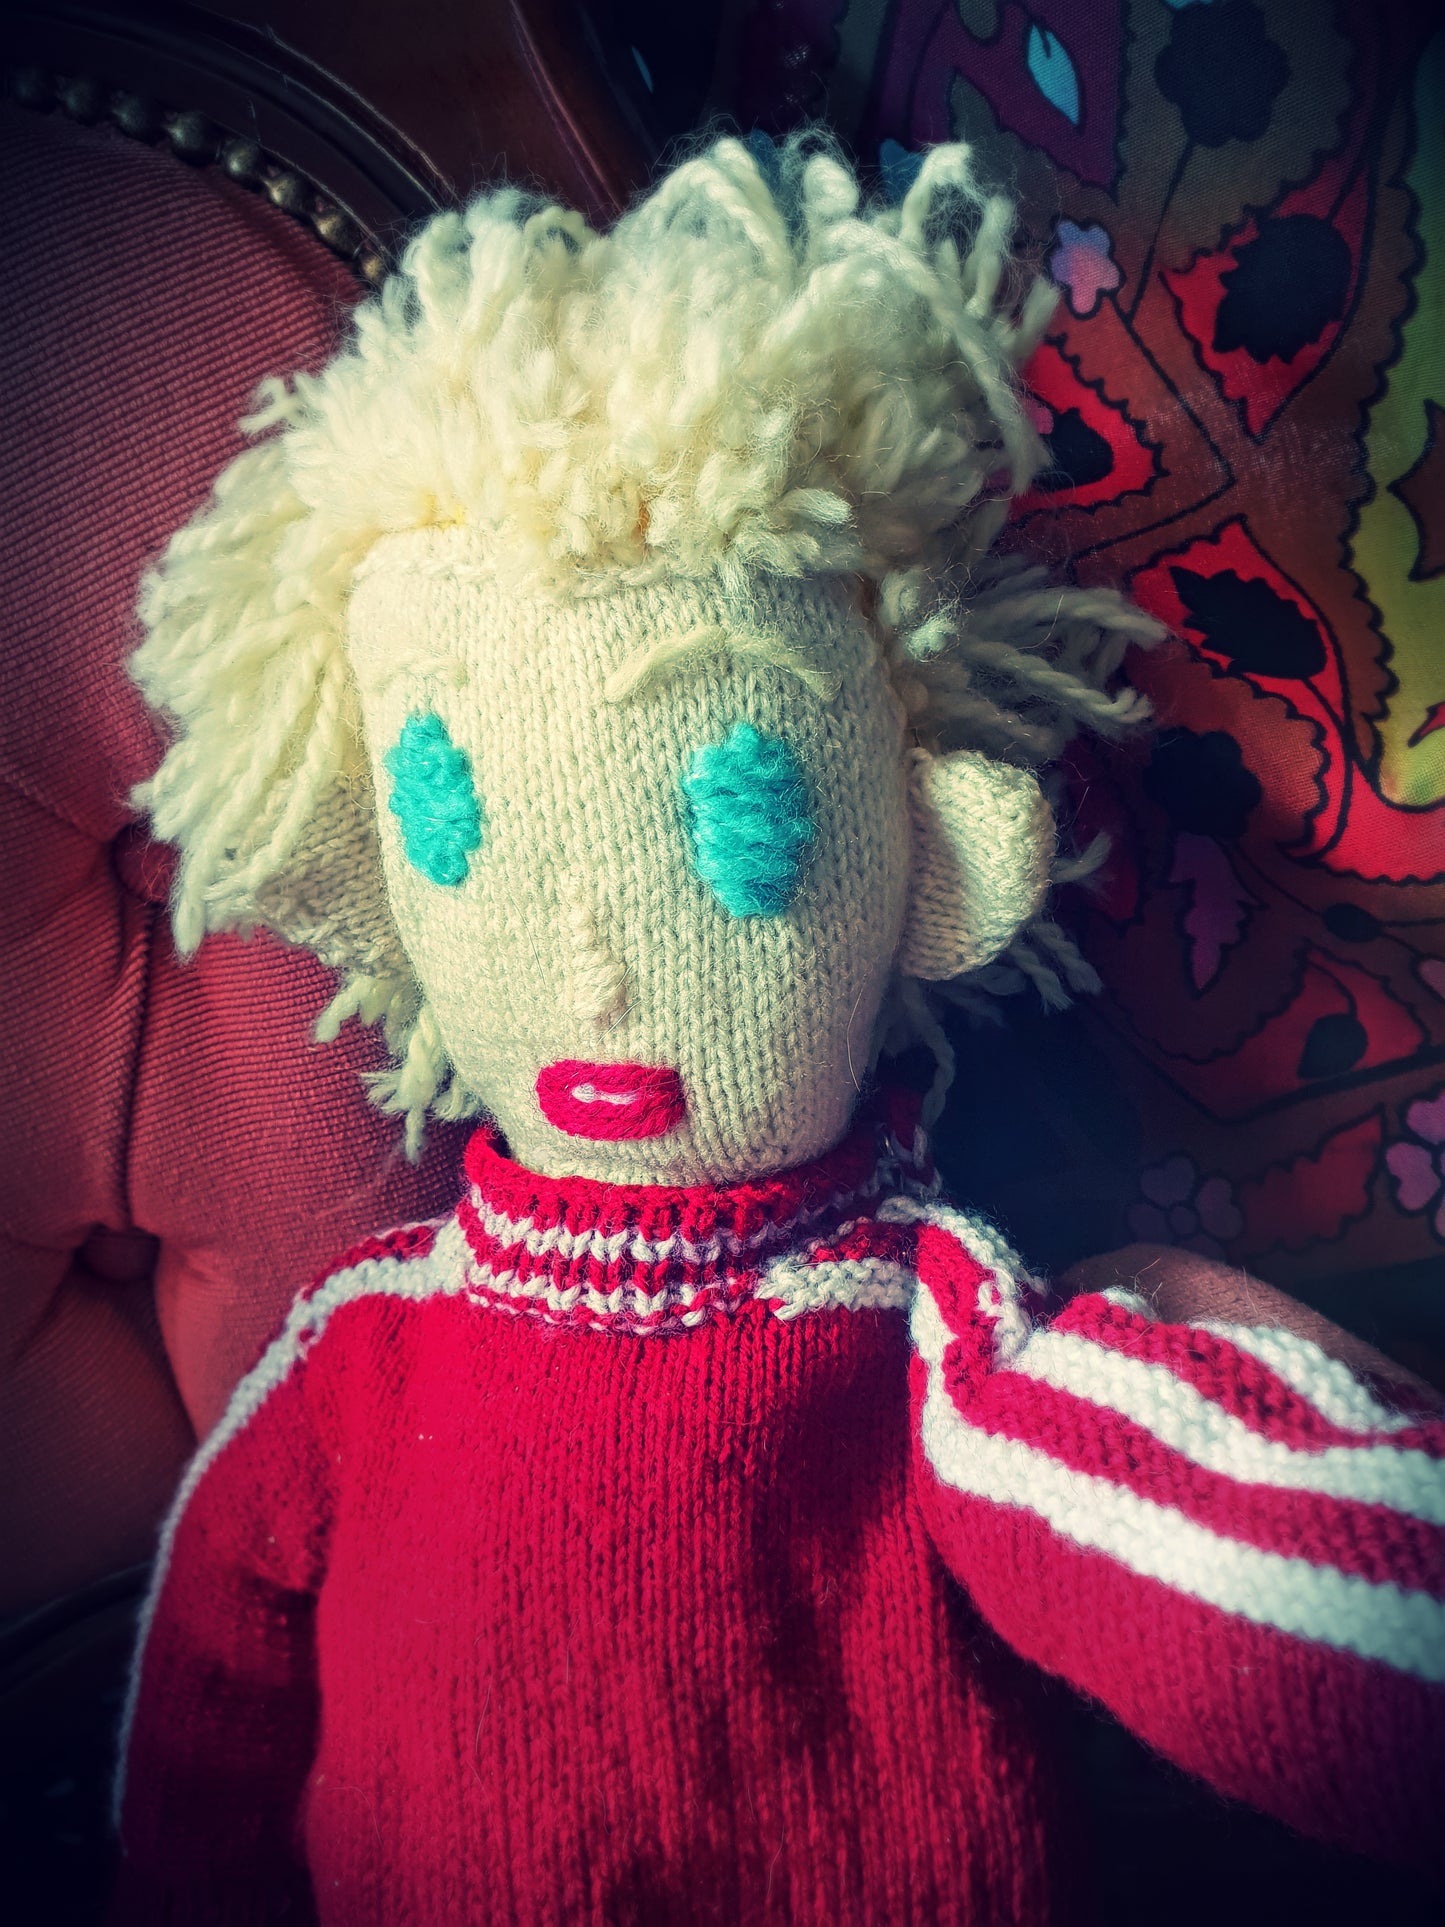 Creepy tall knitted man doll